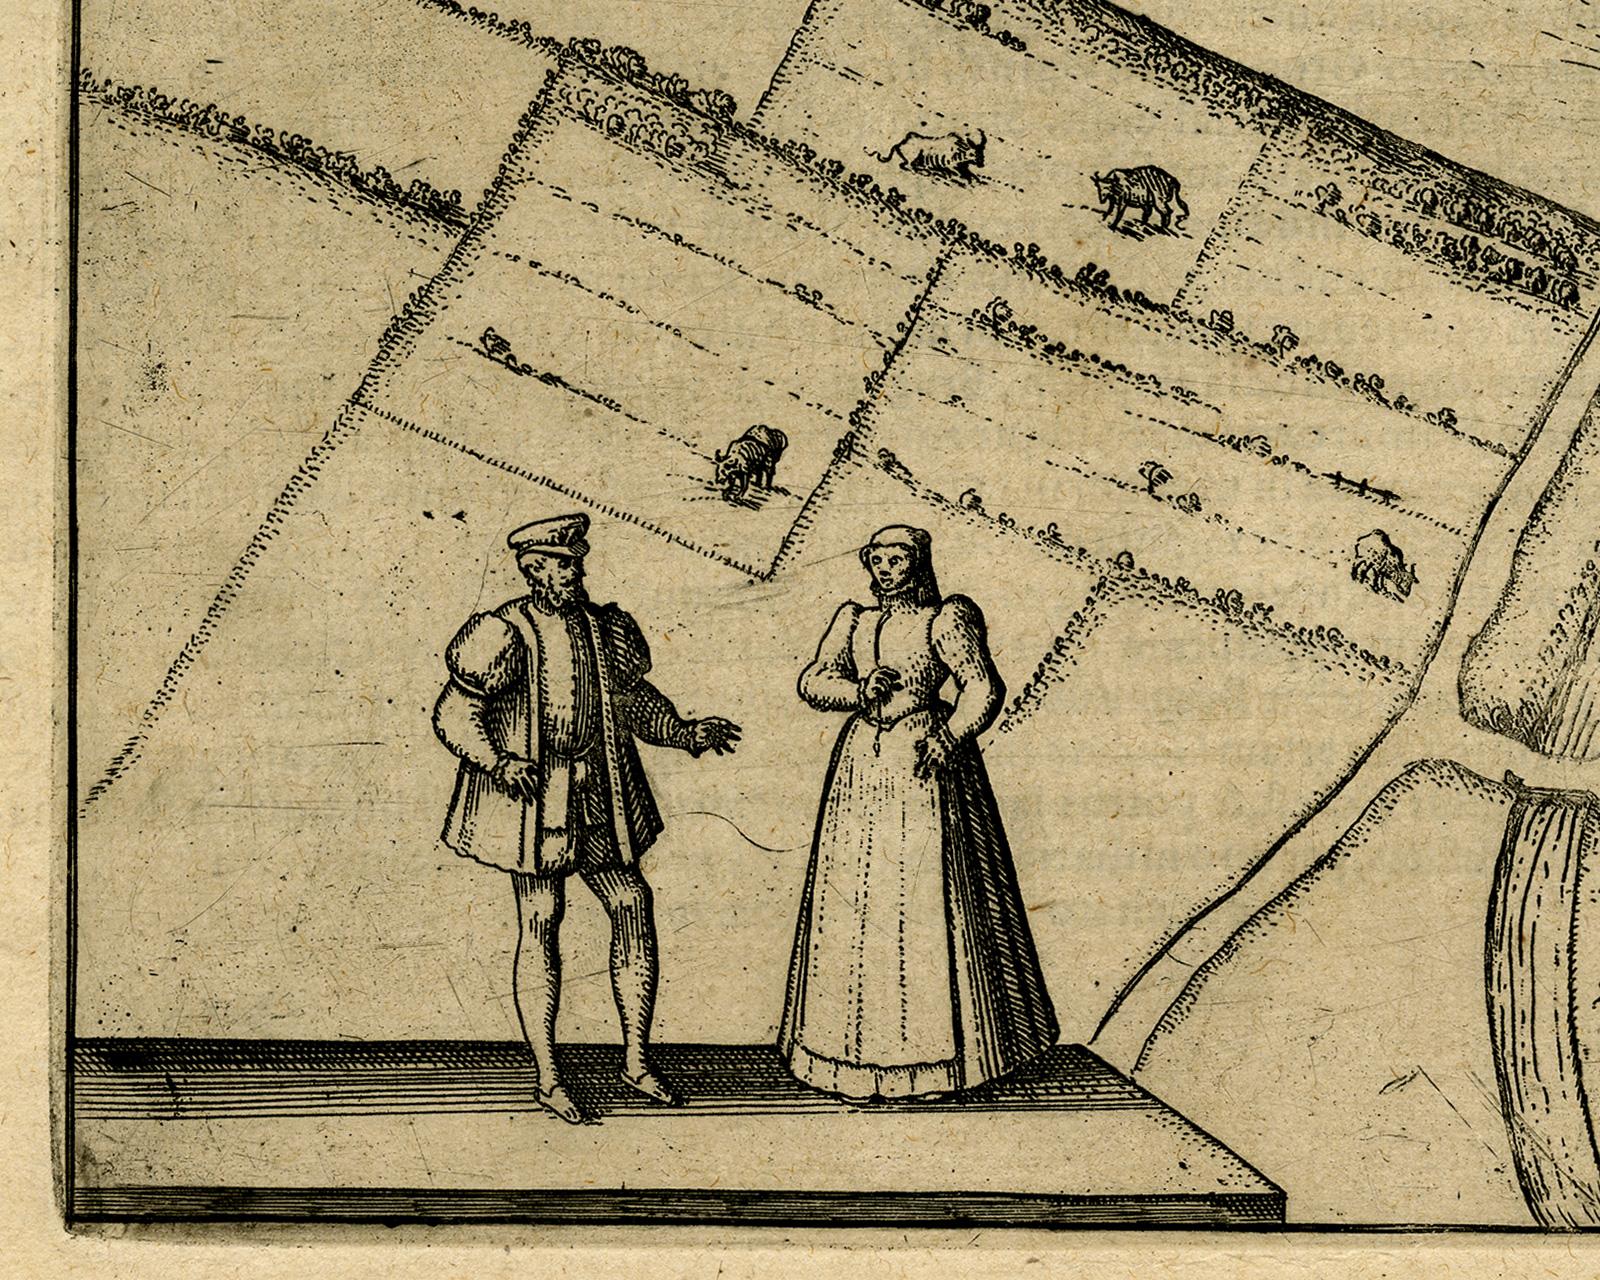 Antique map - Sluis (Sluys) in Zeeland by Braun - Hogenberg - Engraving - 16th c - Old Masters Print by Frans Hogenberg